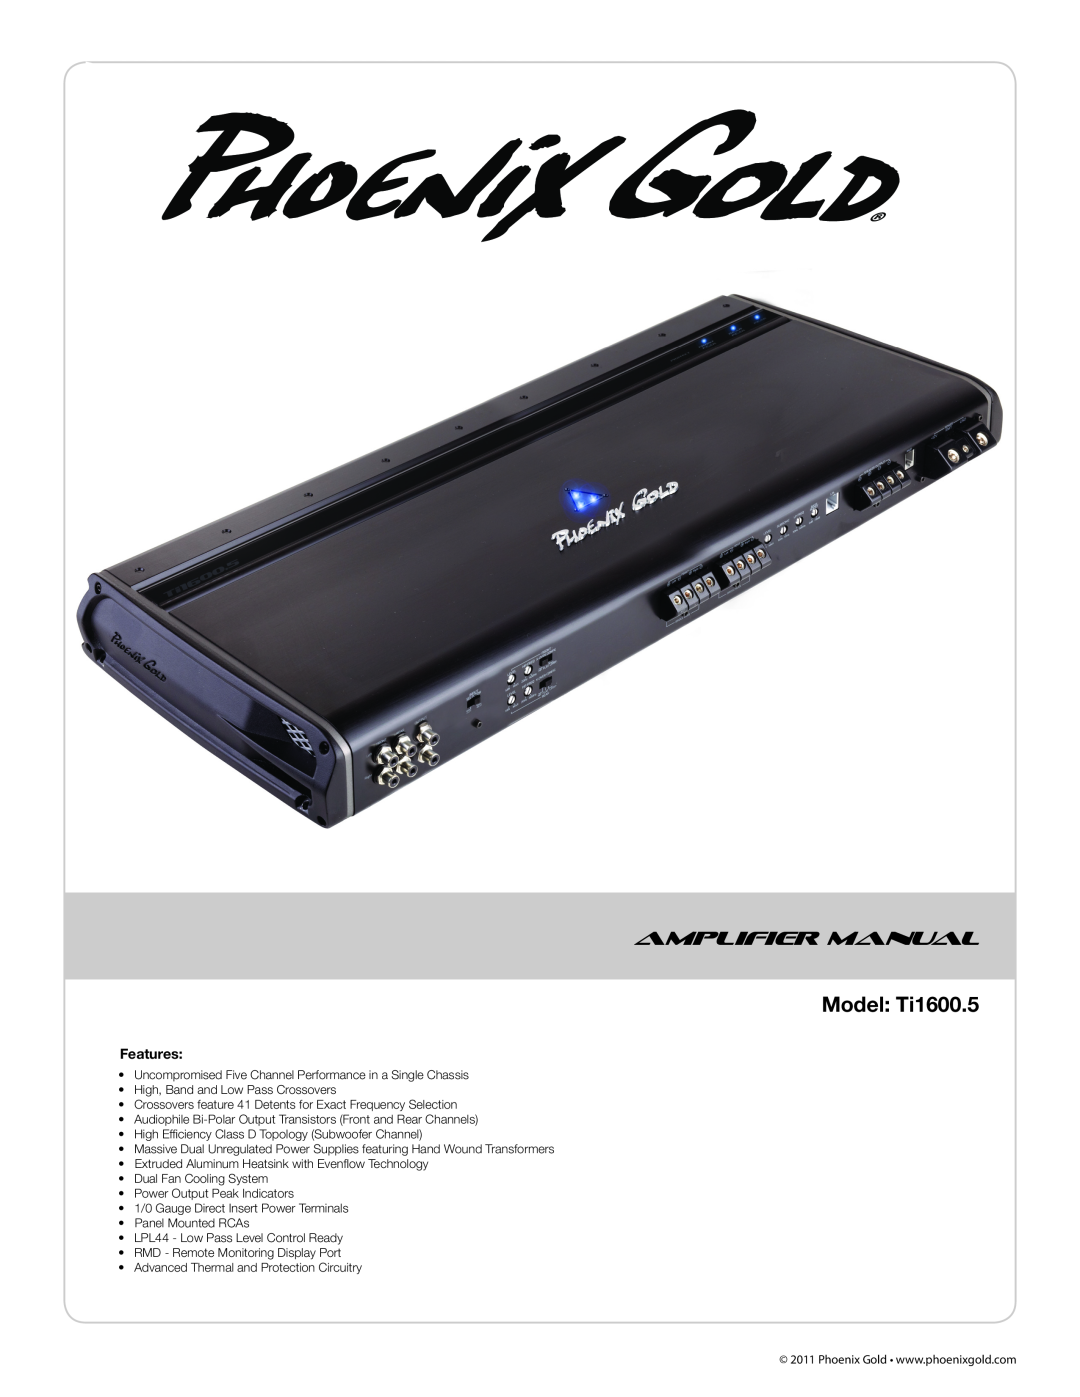 Phoenix Gold TI1600.5 manual Amplifier Manual, Model Ti1600.5, Features 